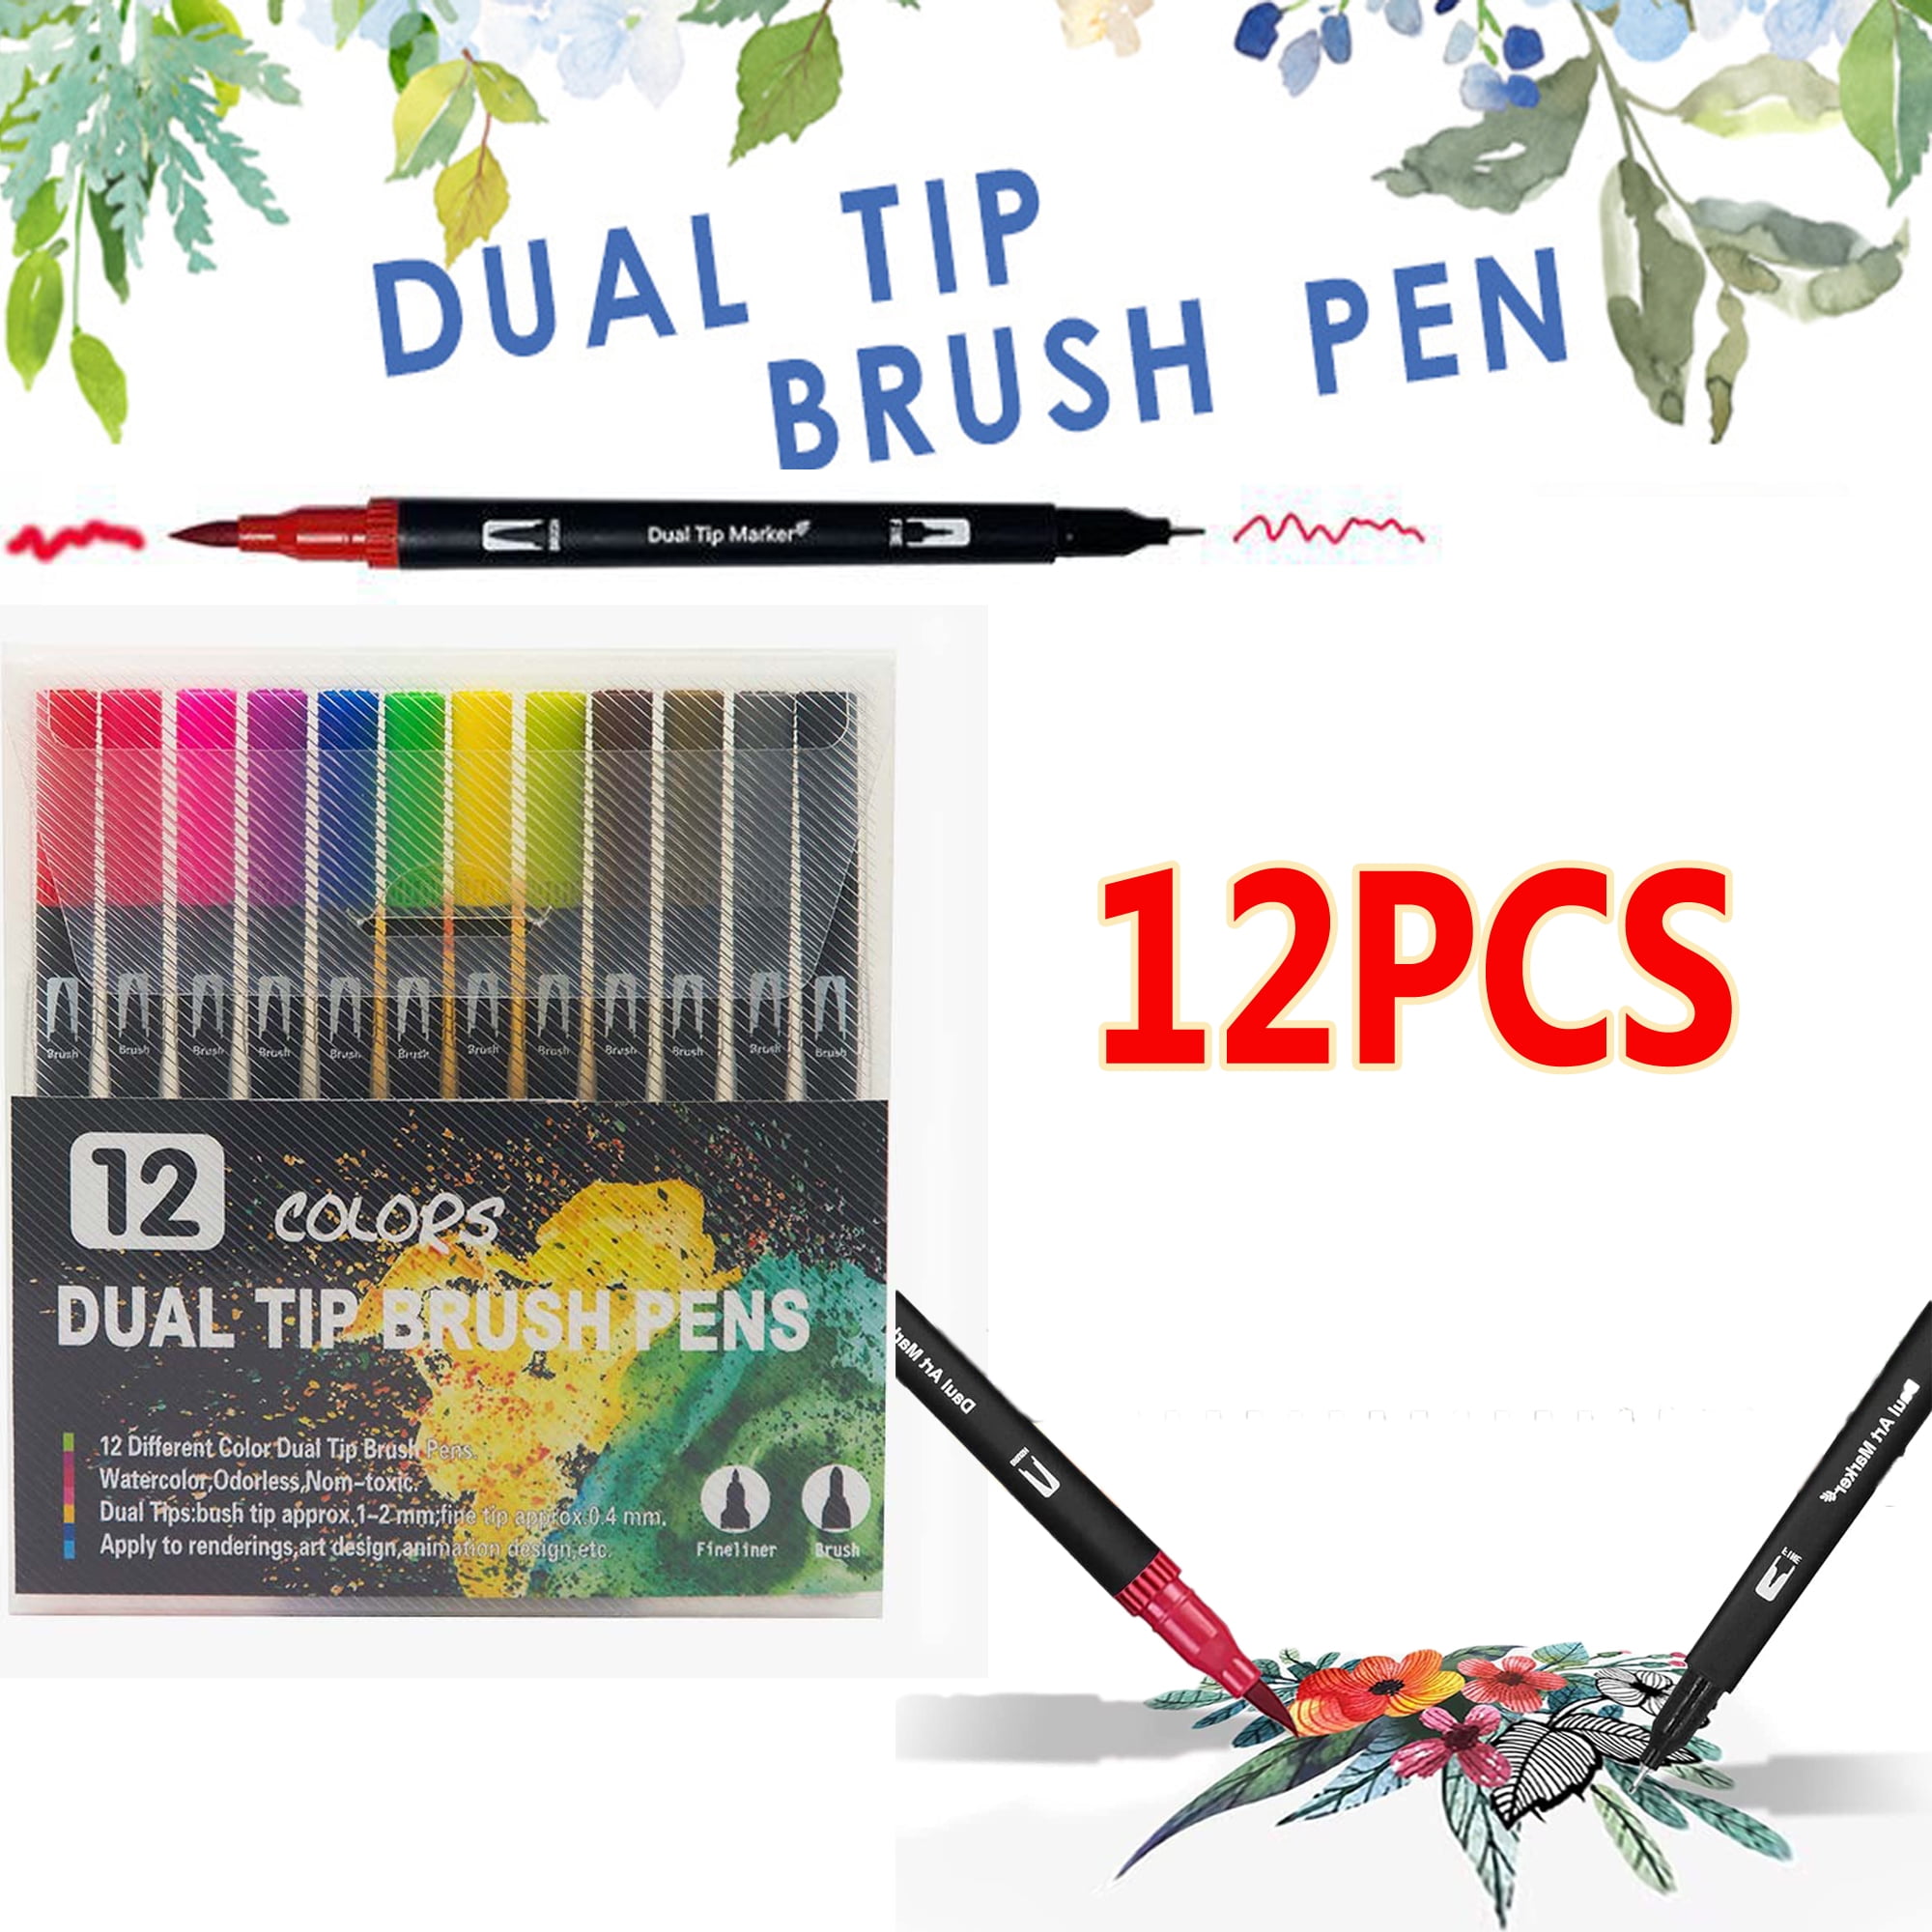  Nylea Artwerk 15 Pack Brush Calligraphy Art Pens